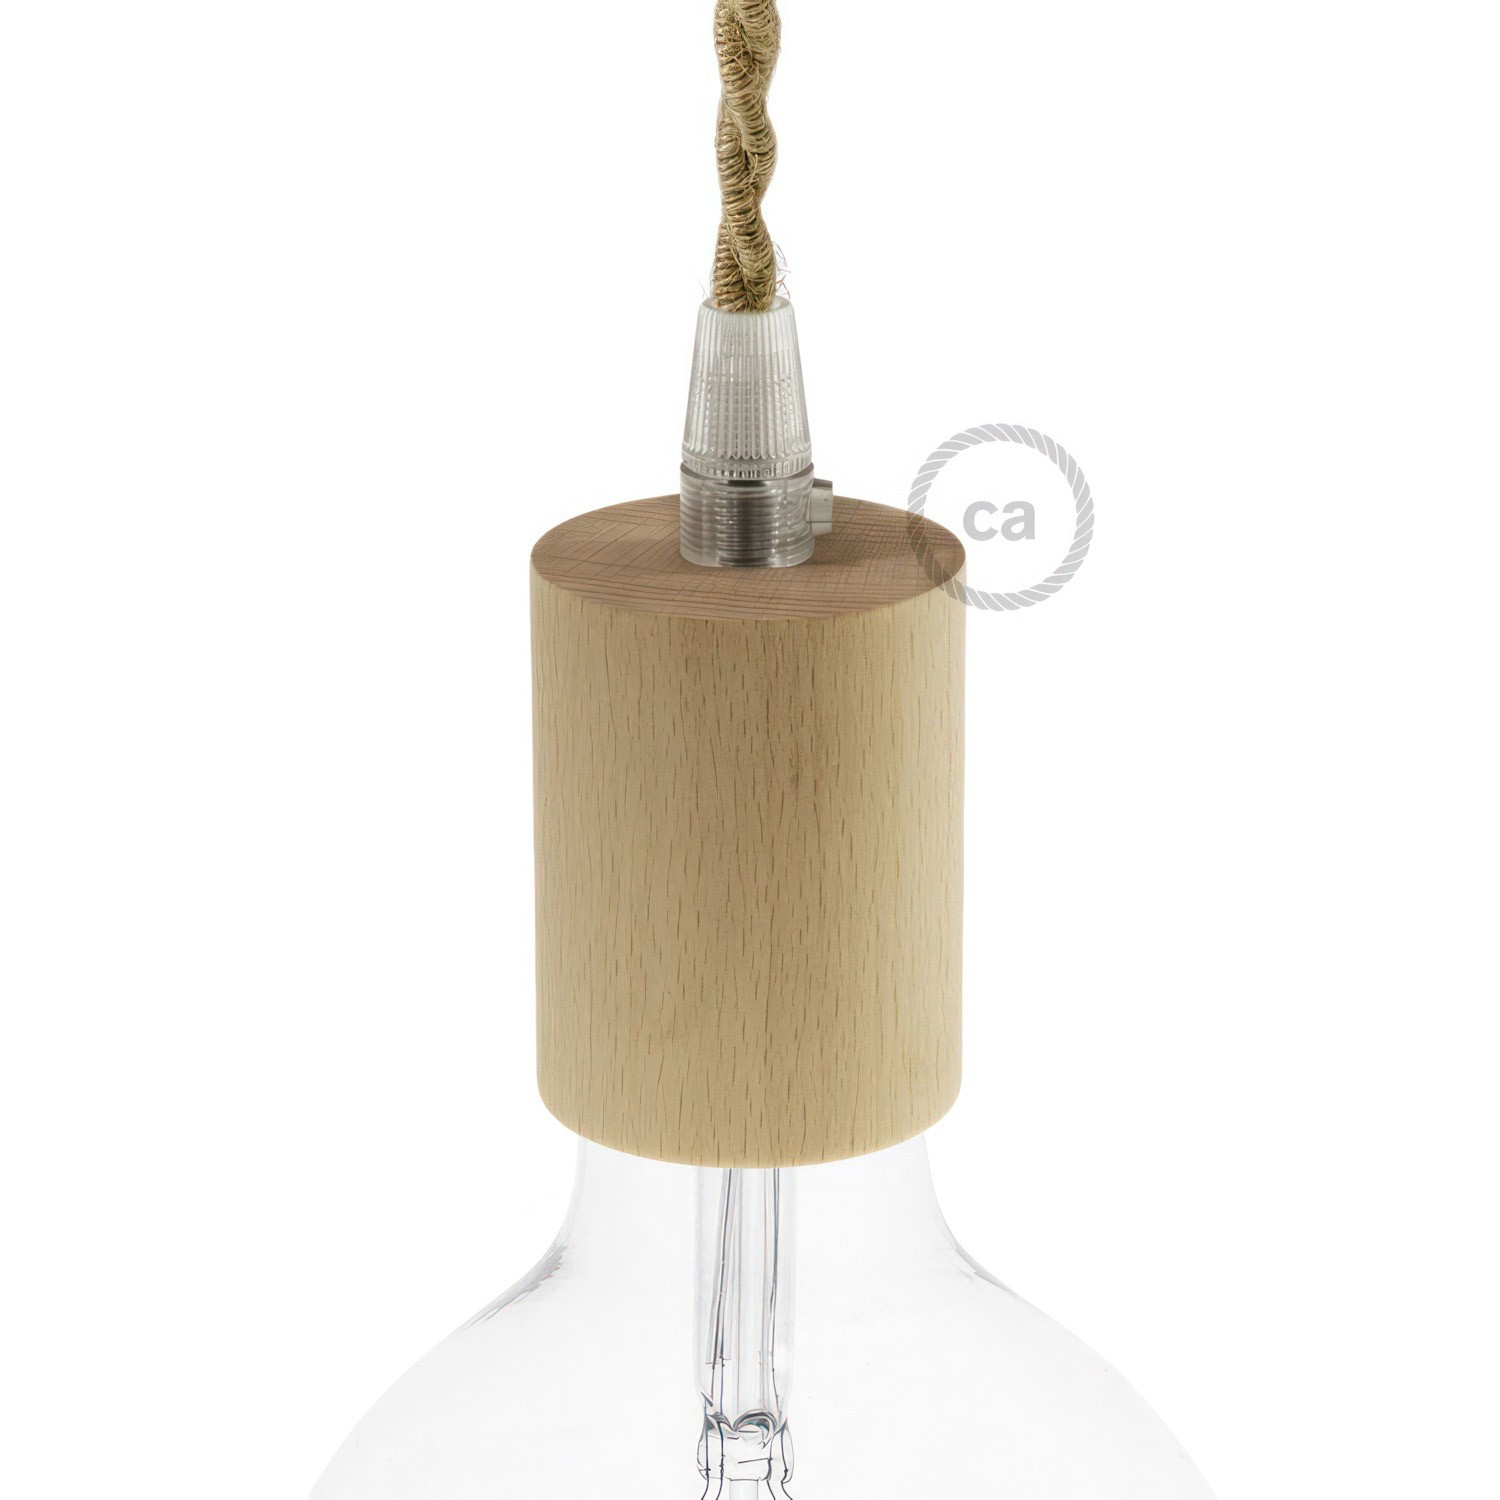 E27-Lampenfassungs-Kit aus Holz